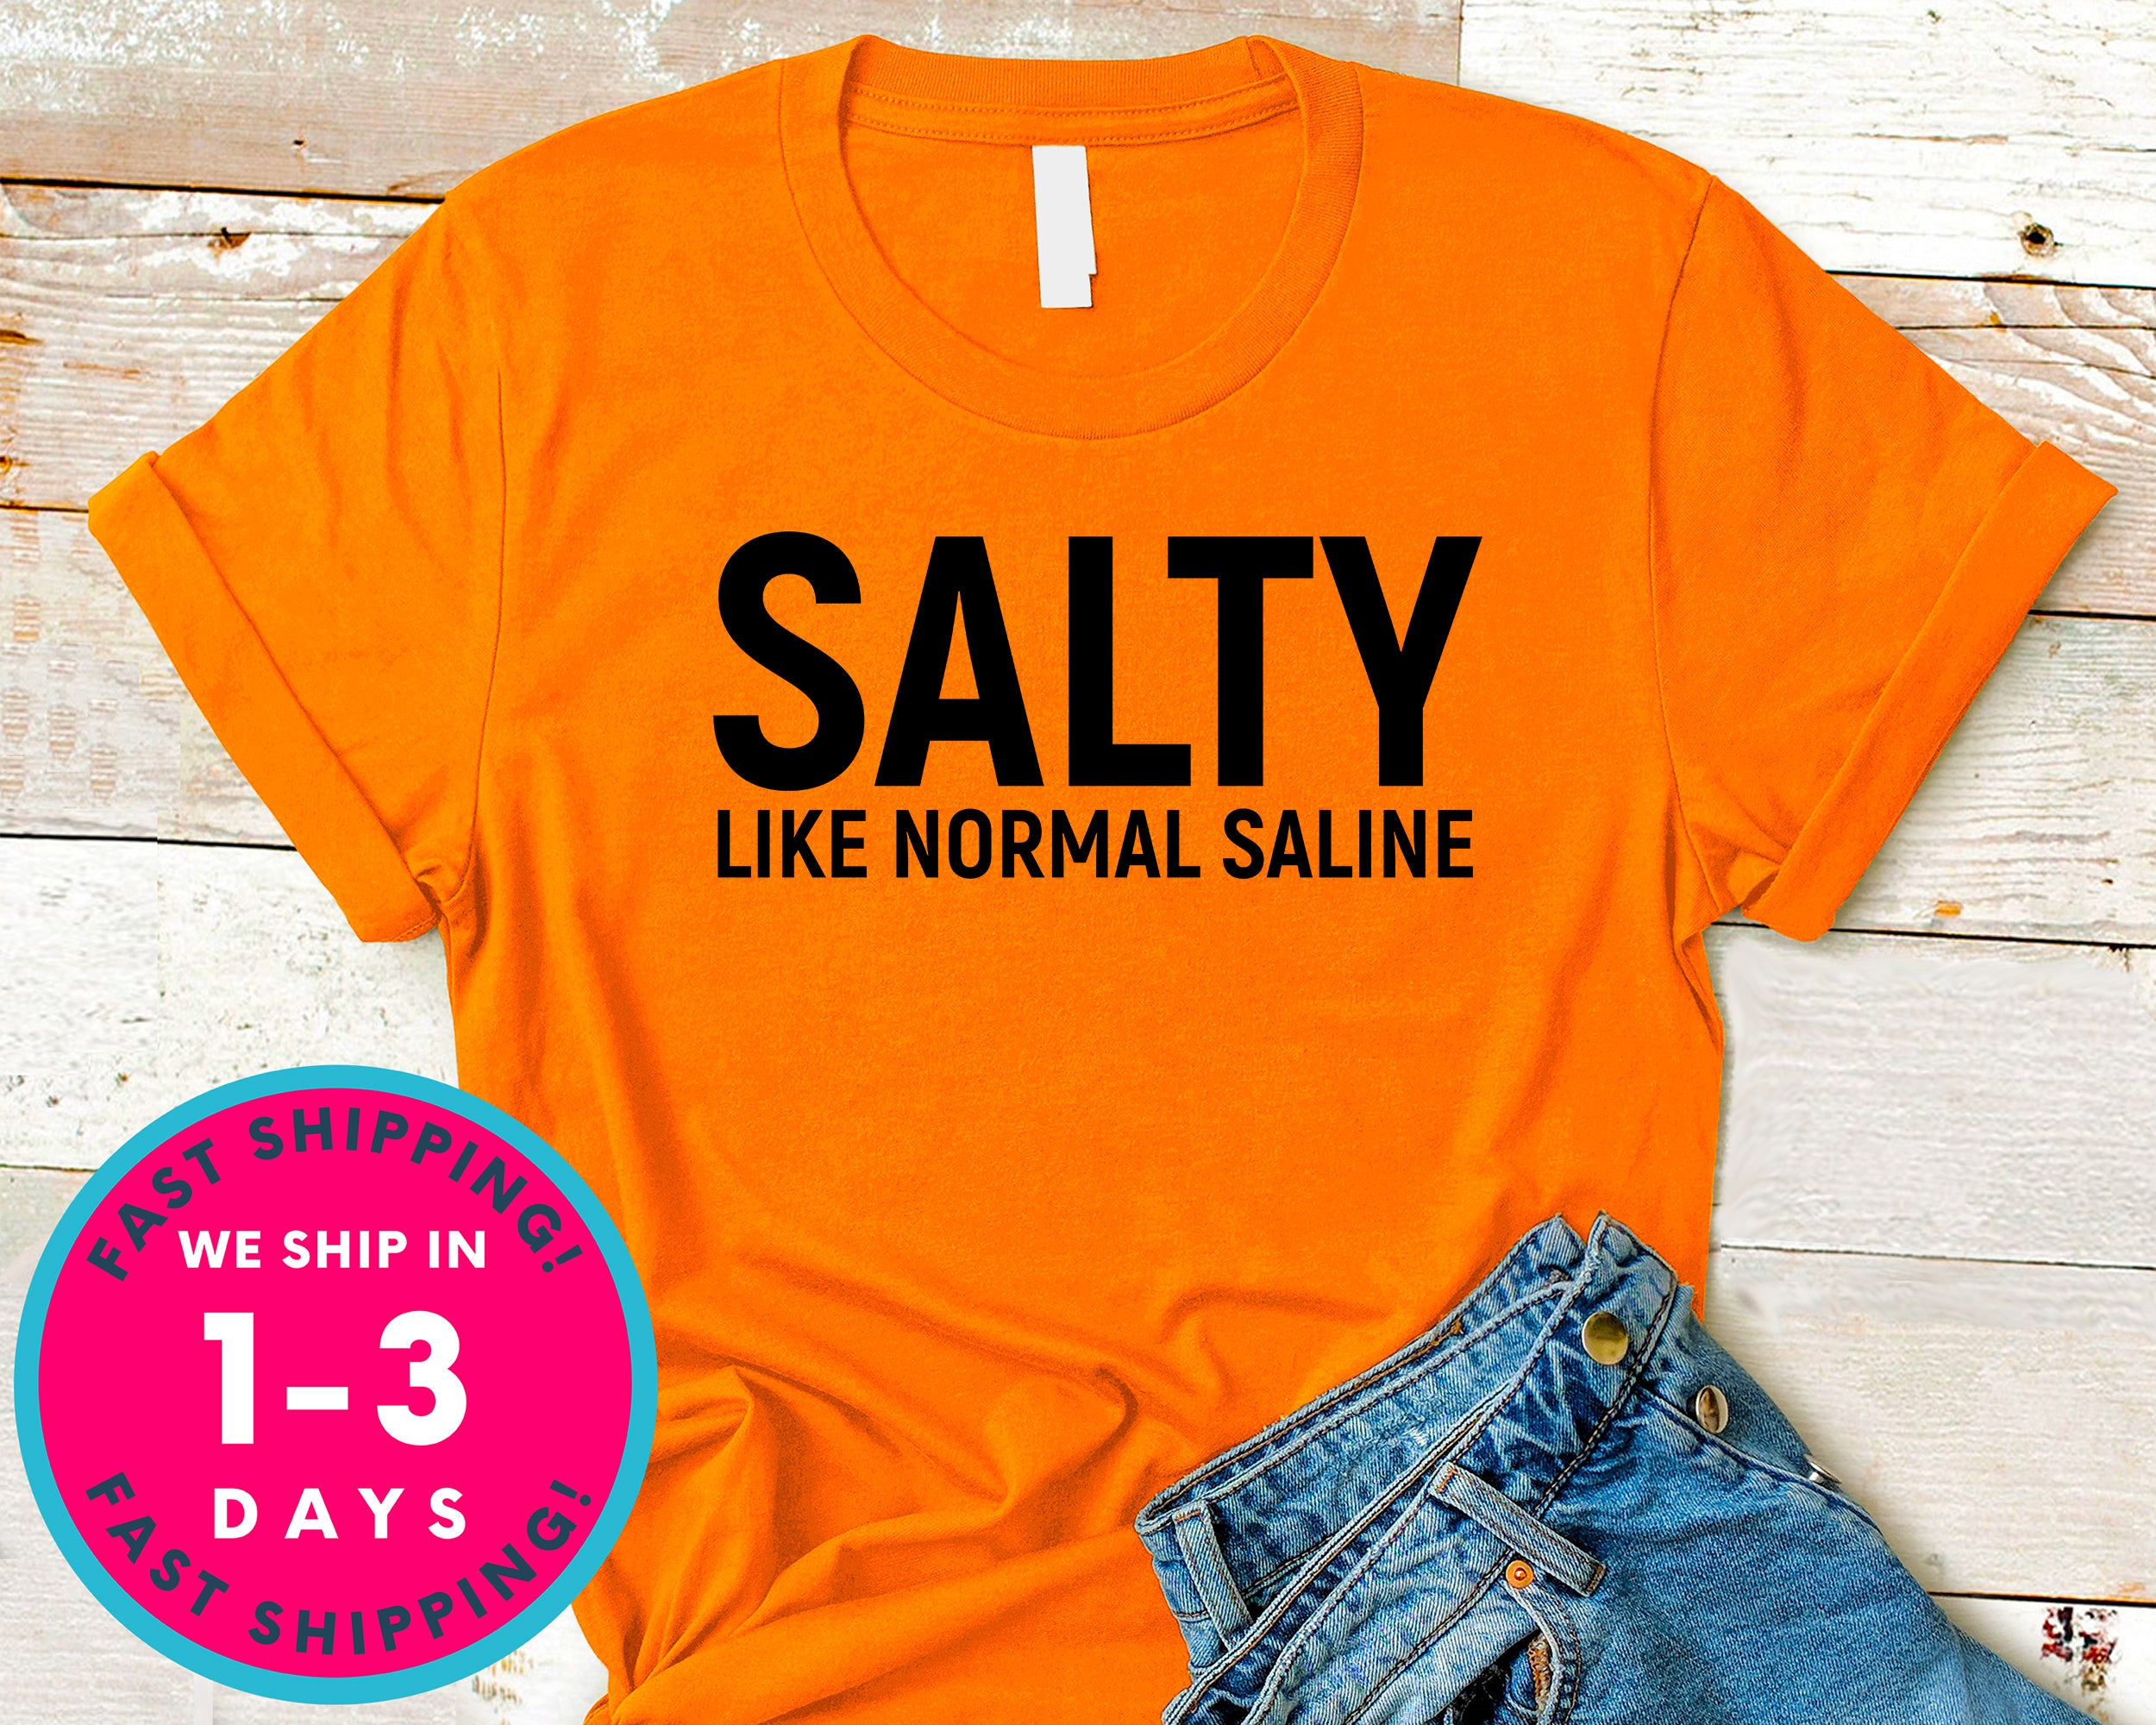 Salty Like Normal Saline T-Shirt - Inspirational Quotes Saying Shirt